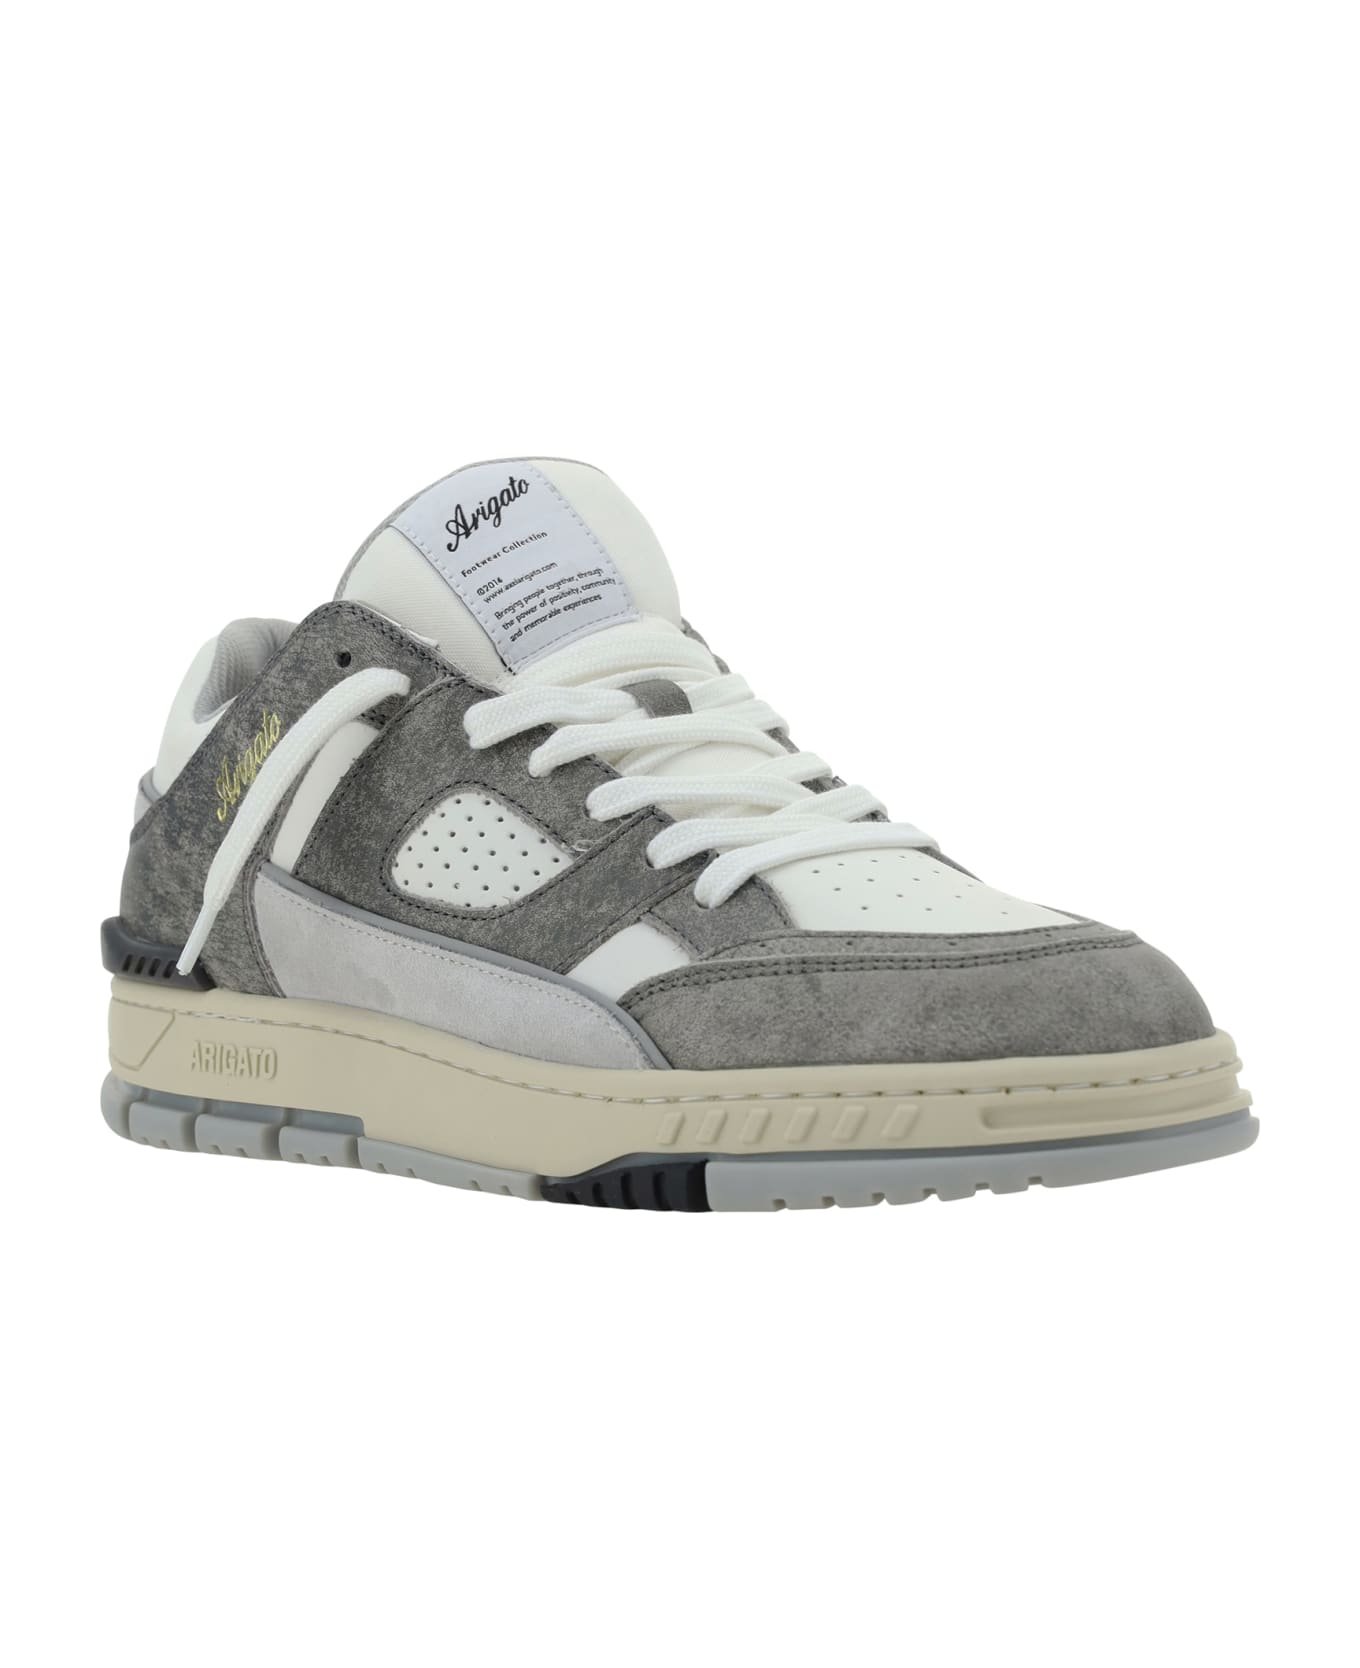 Axel Arigato Area Lo Sneakers - White/grey